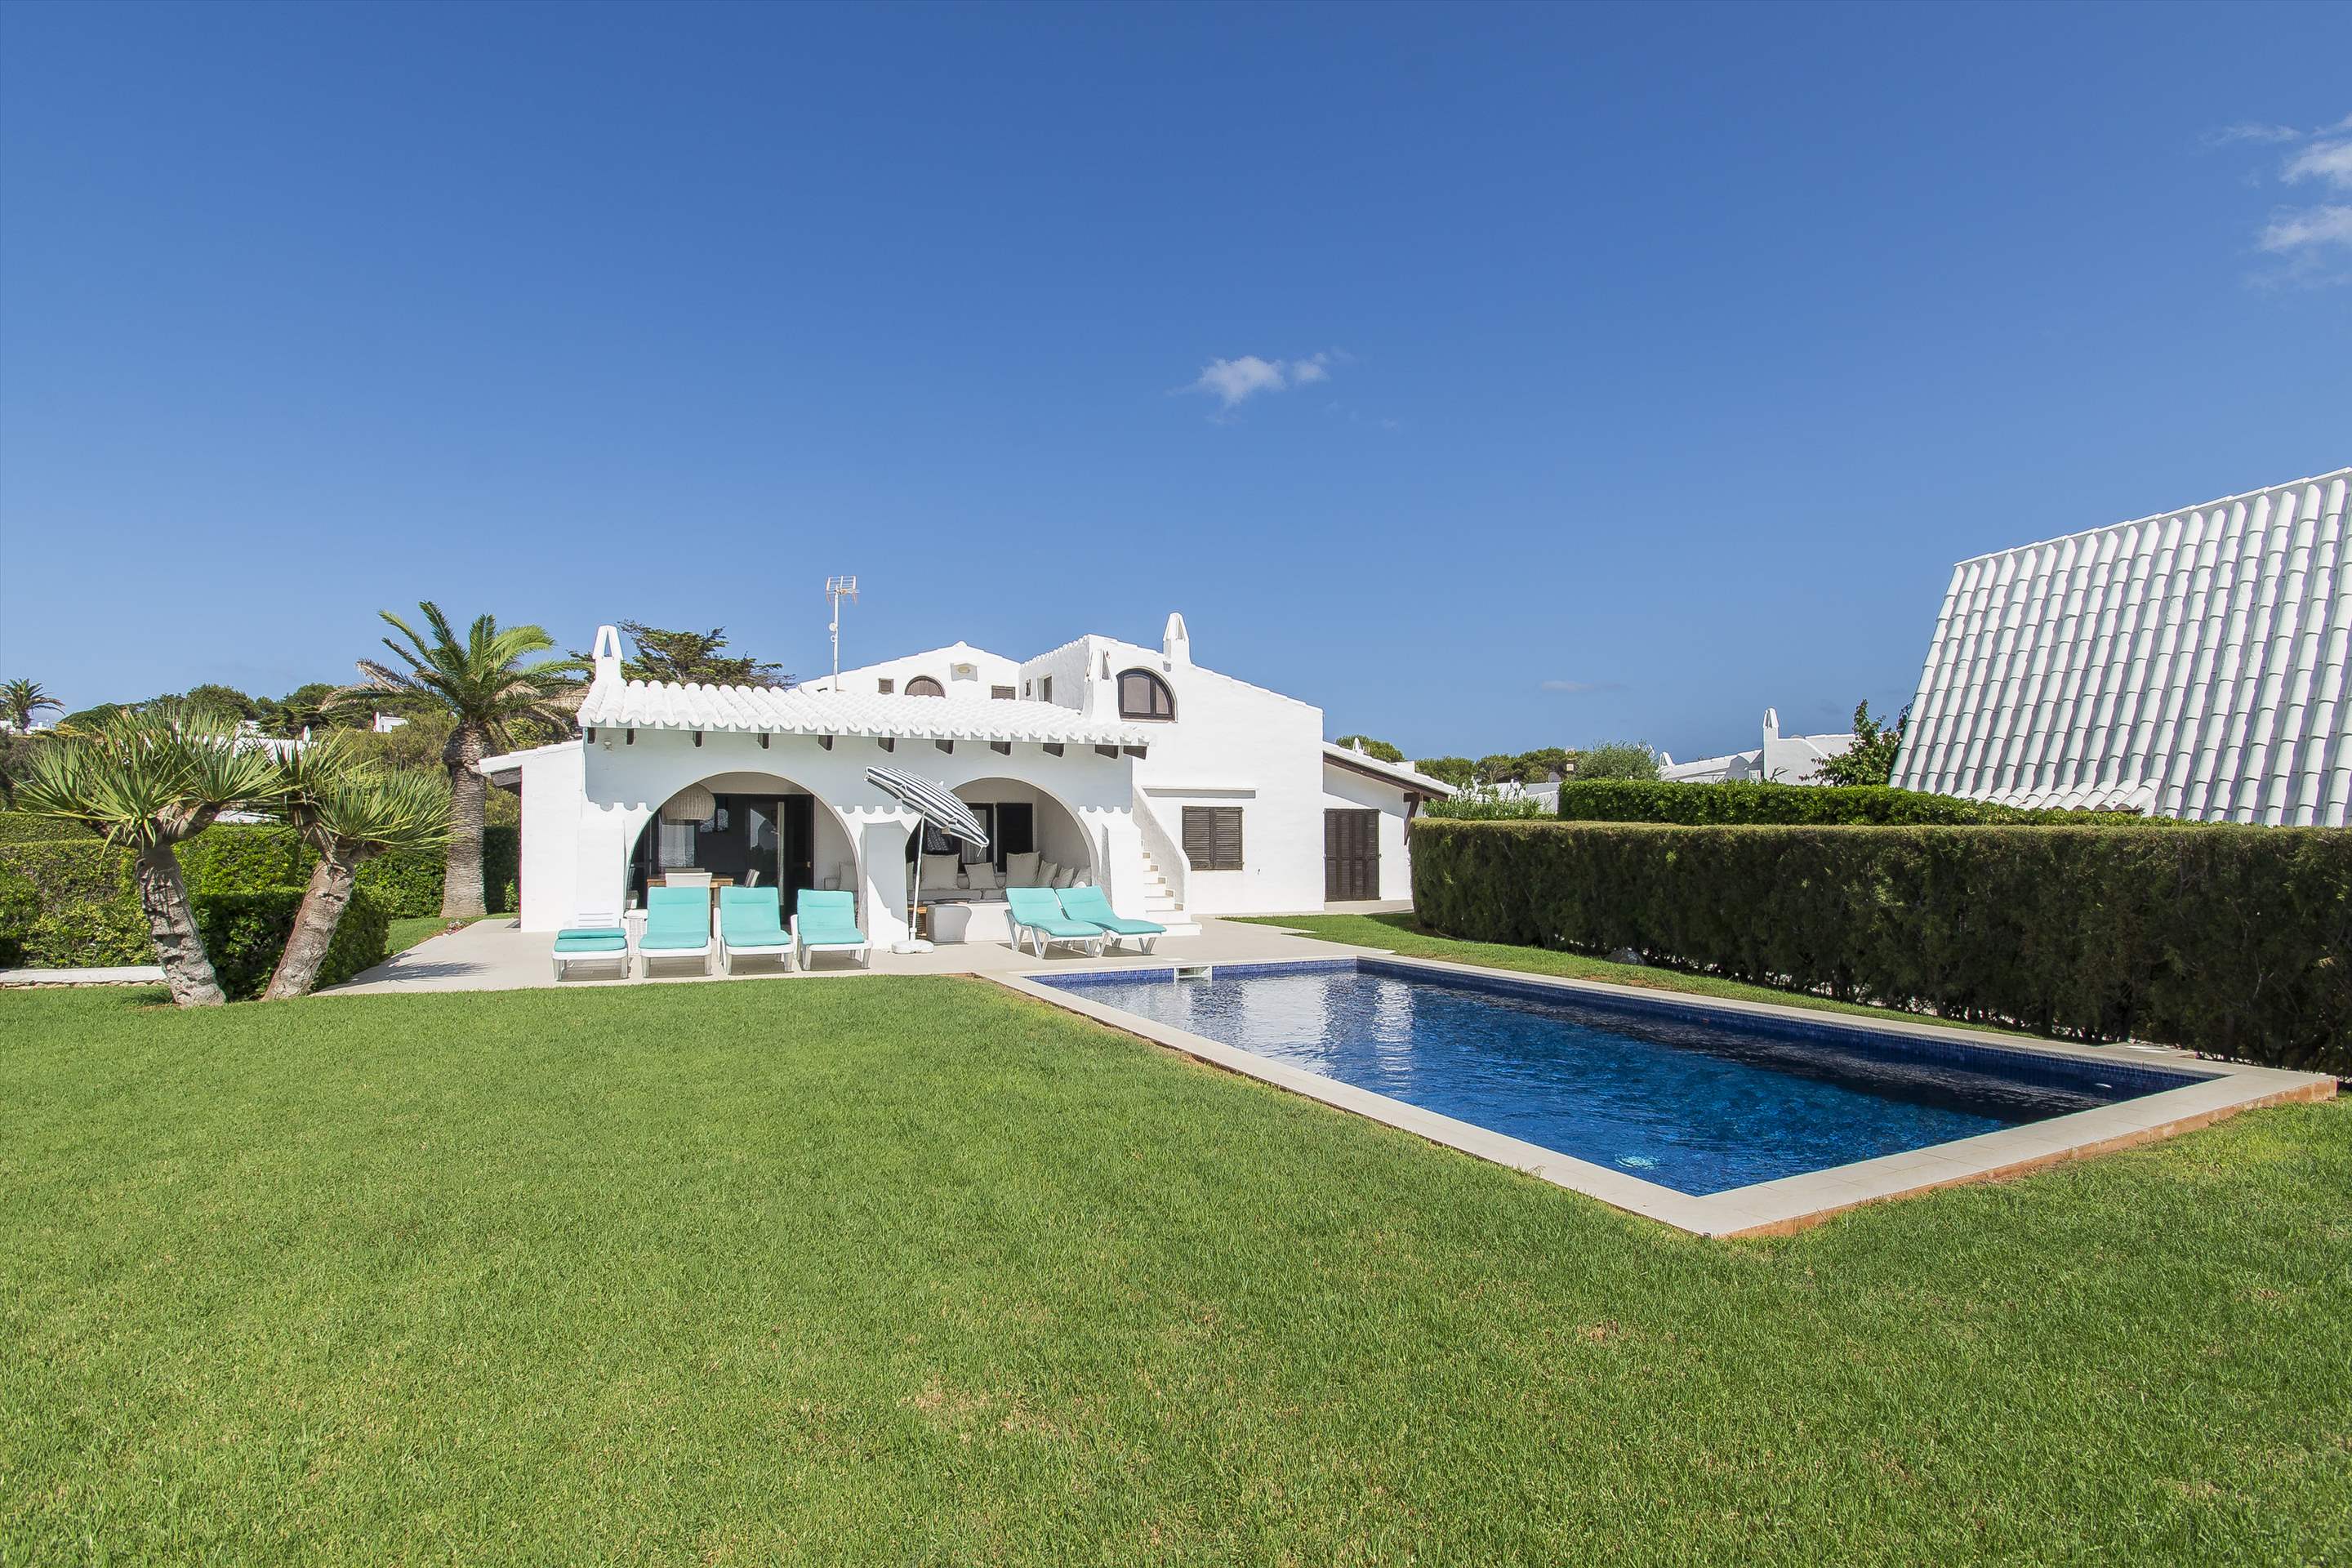 Villa Bini Andu, 3 bedroom villa in Mahon, San Luis & South East, Menorca Photo #1